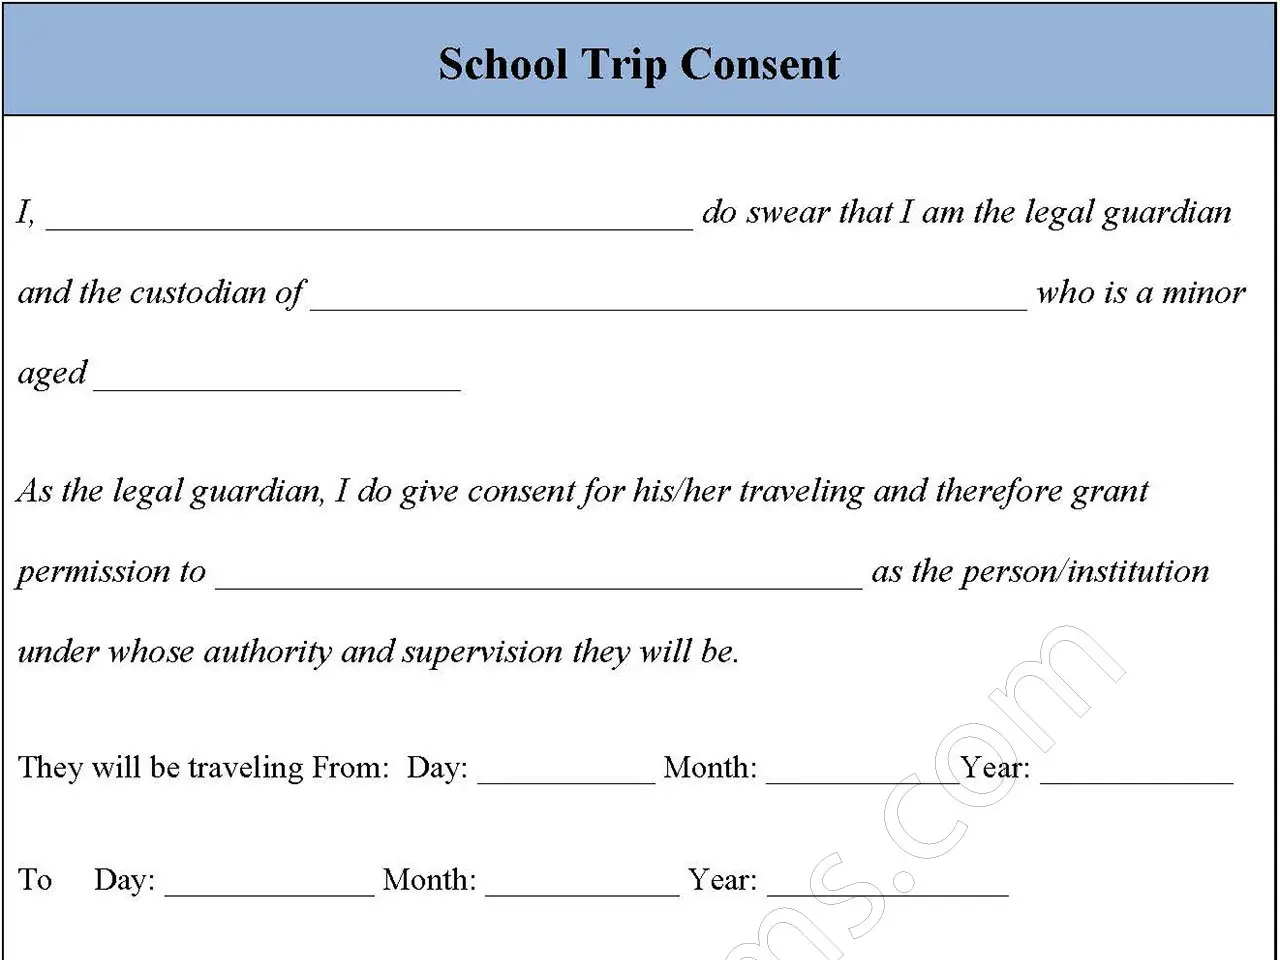 School Trip Consent Form